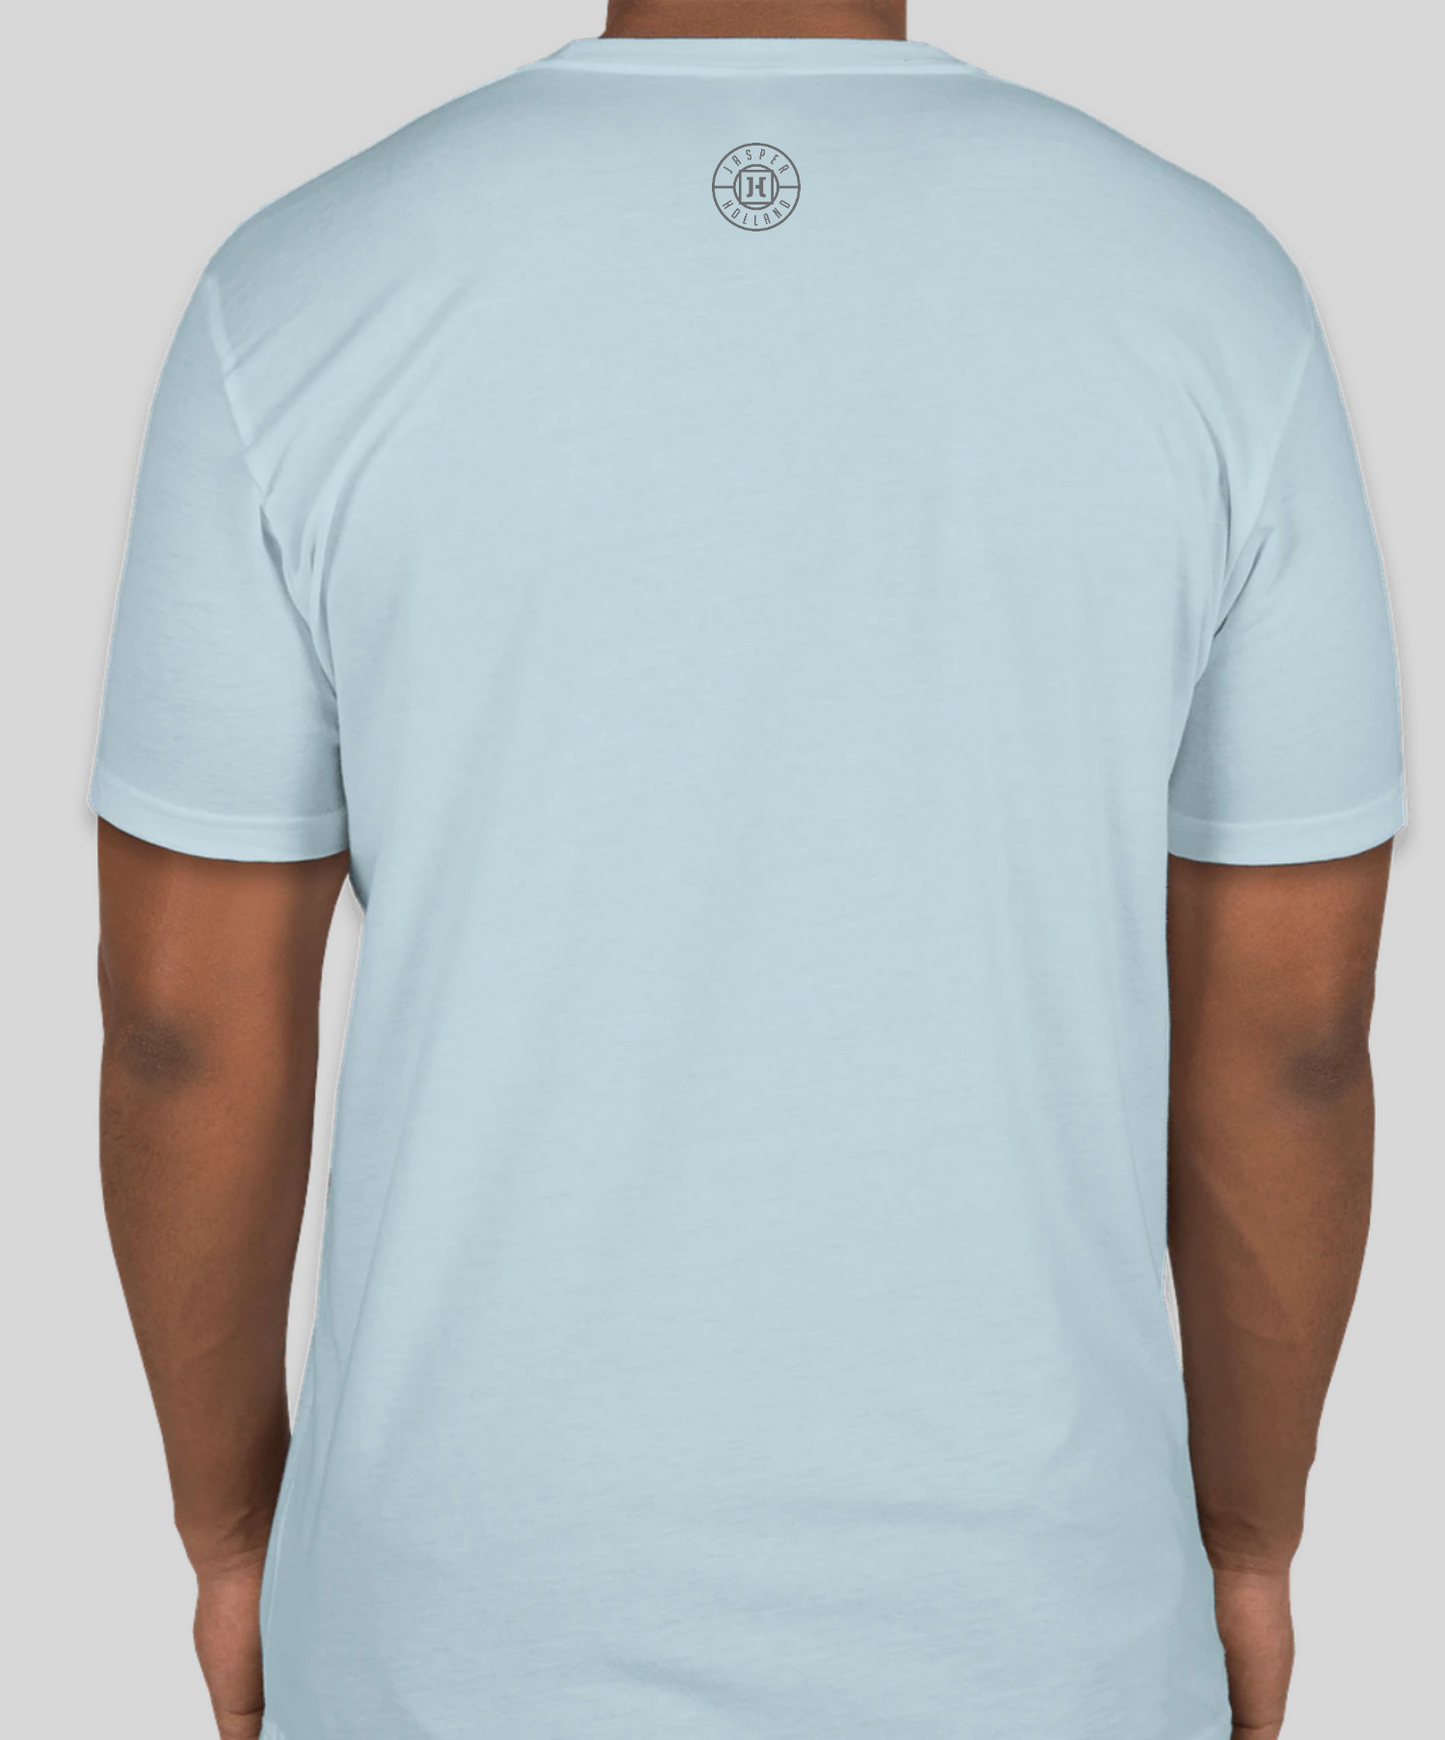 Jasper Holland Co - Square Logo Design Mens T-shirt (Light Blue - Sueded)